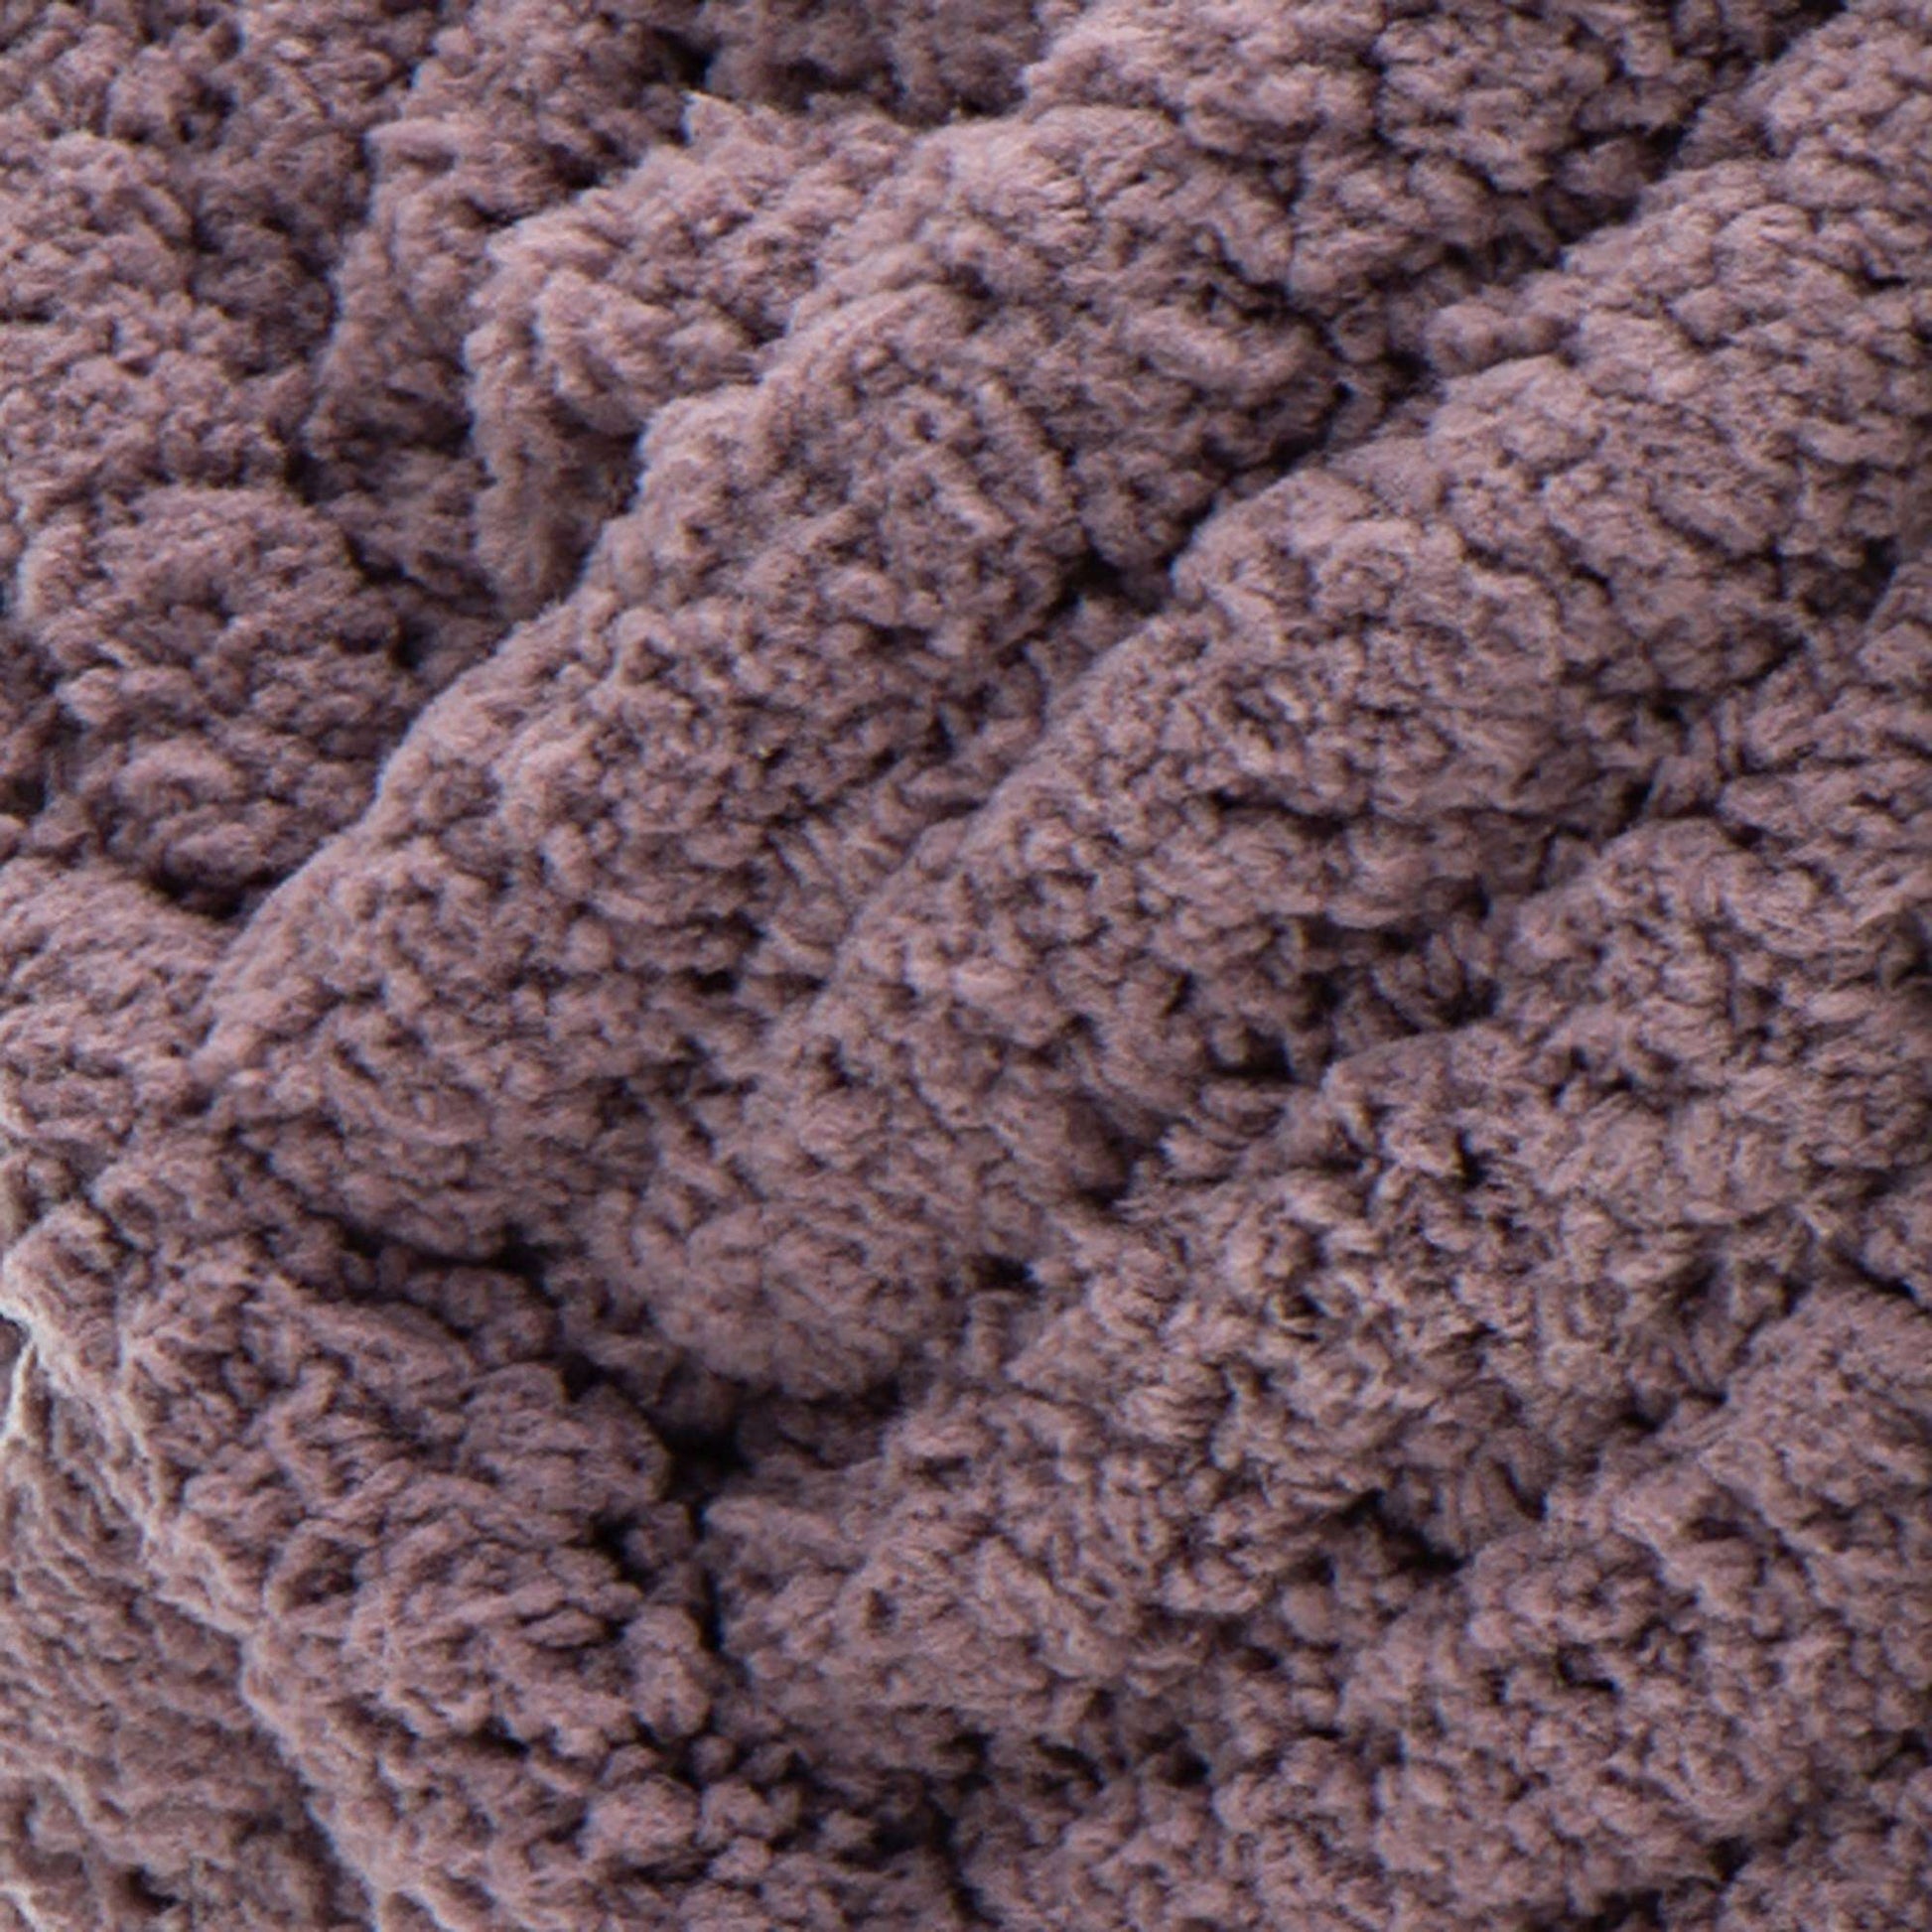 Bernat Extra Thick Seed Stitch Knit Blanket​ Pattern